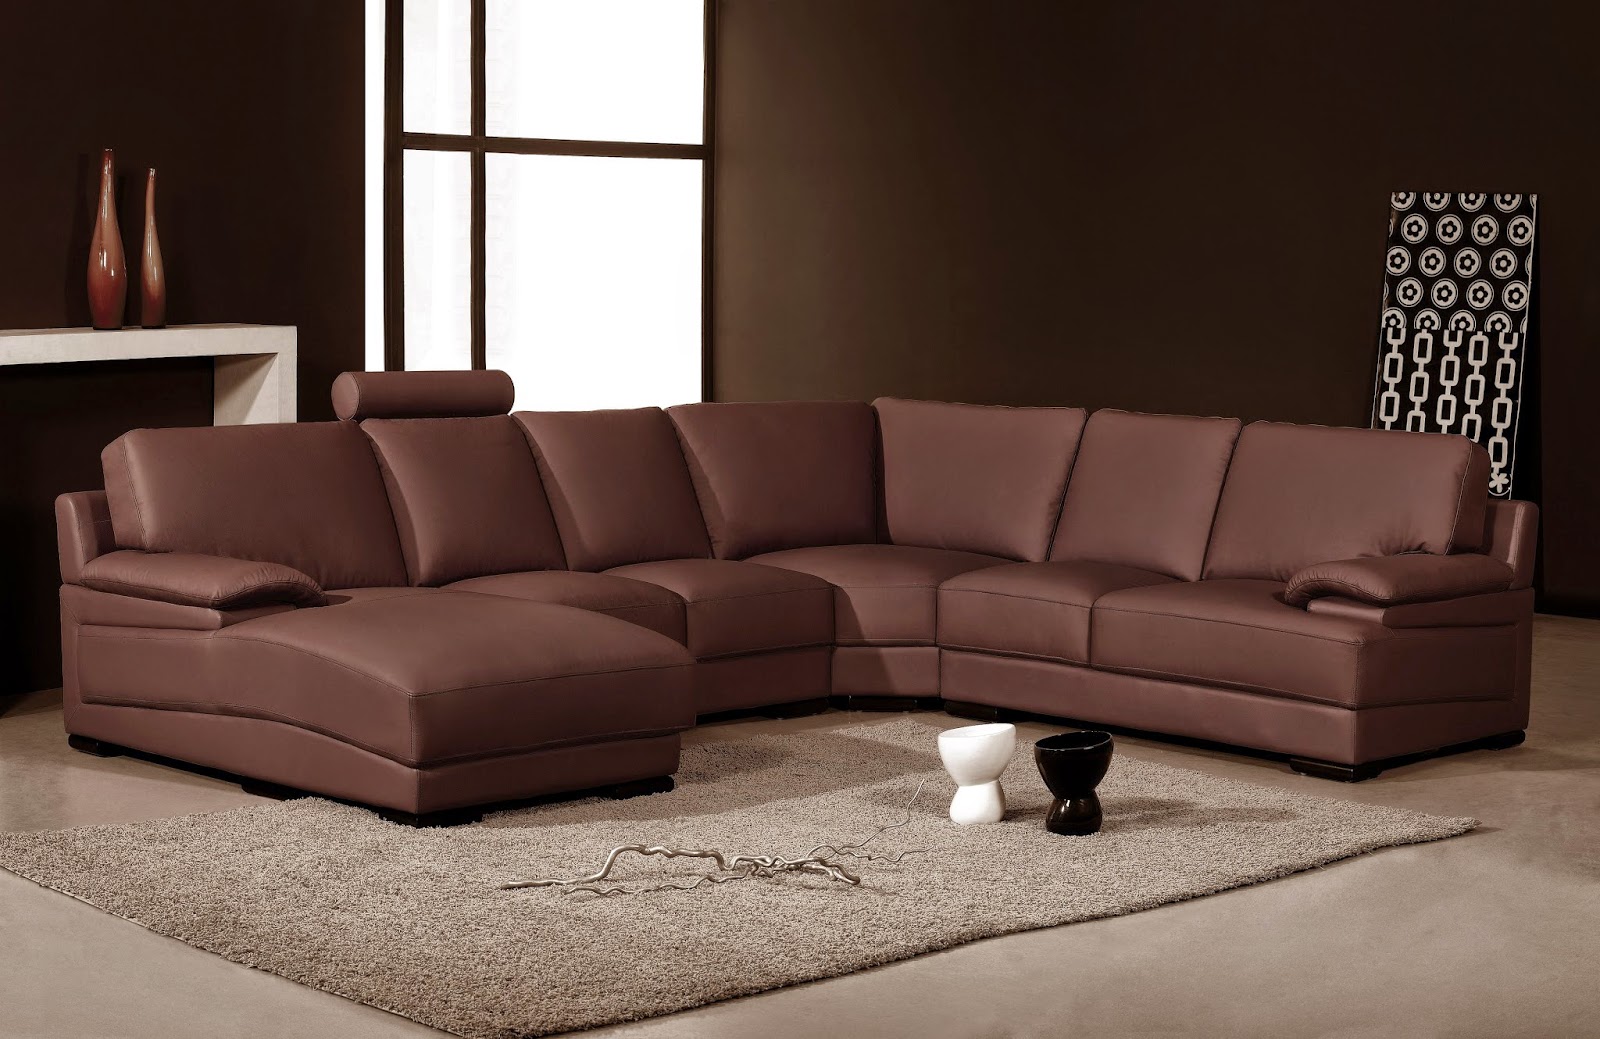 2 Living Room Decor Ideas Brown Leather Sofa Home Design Hd